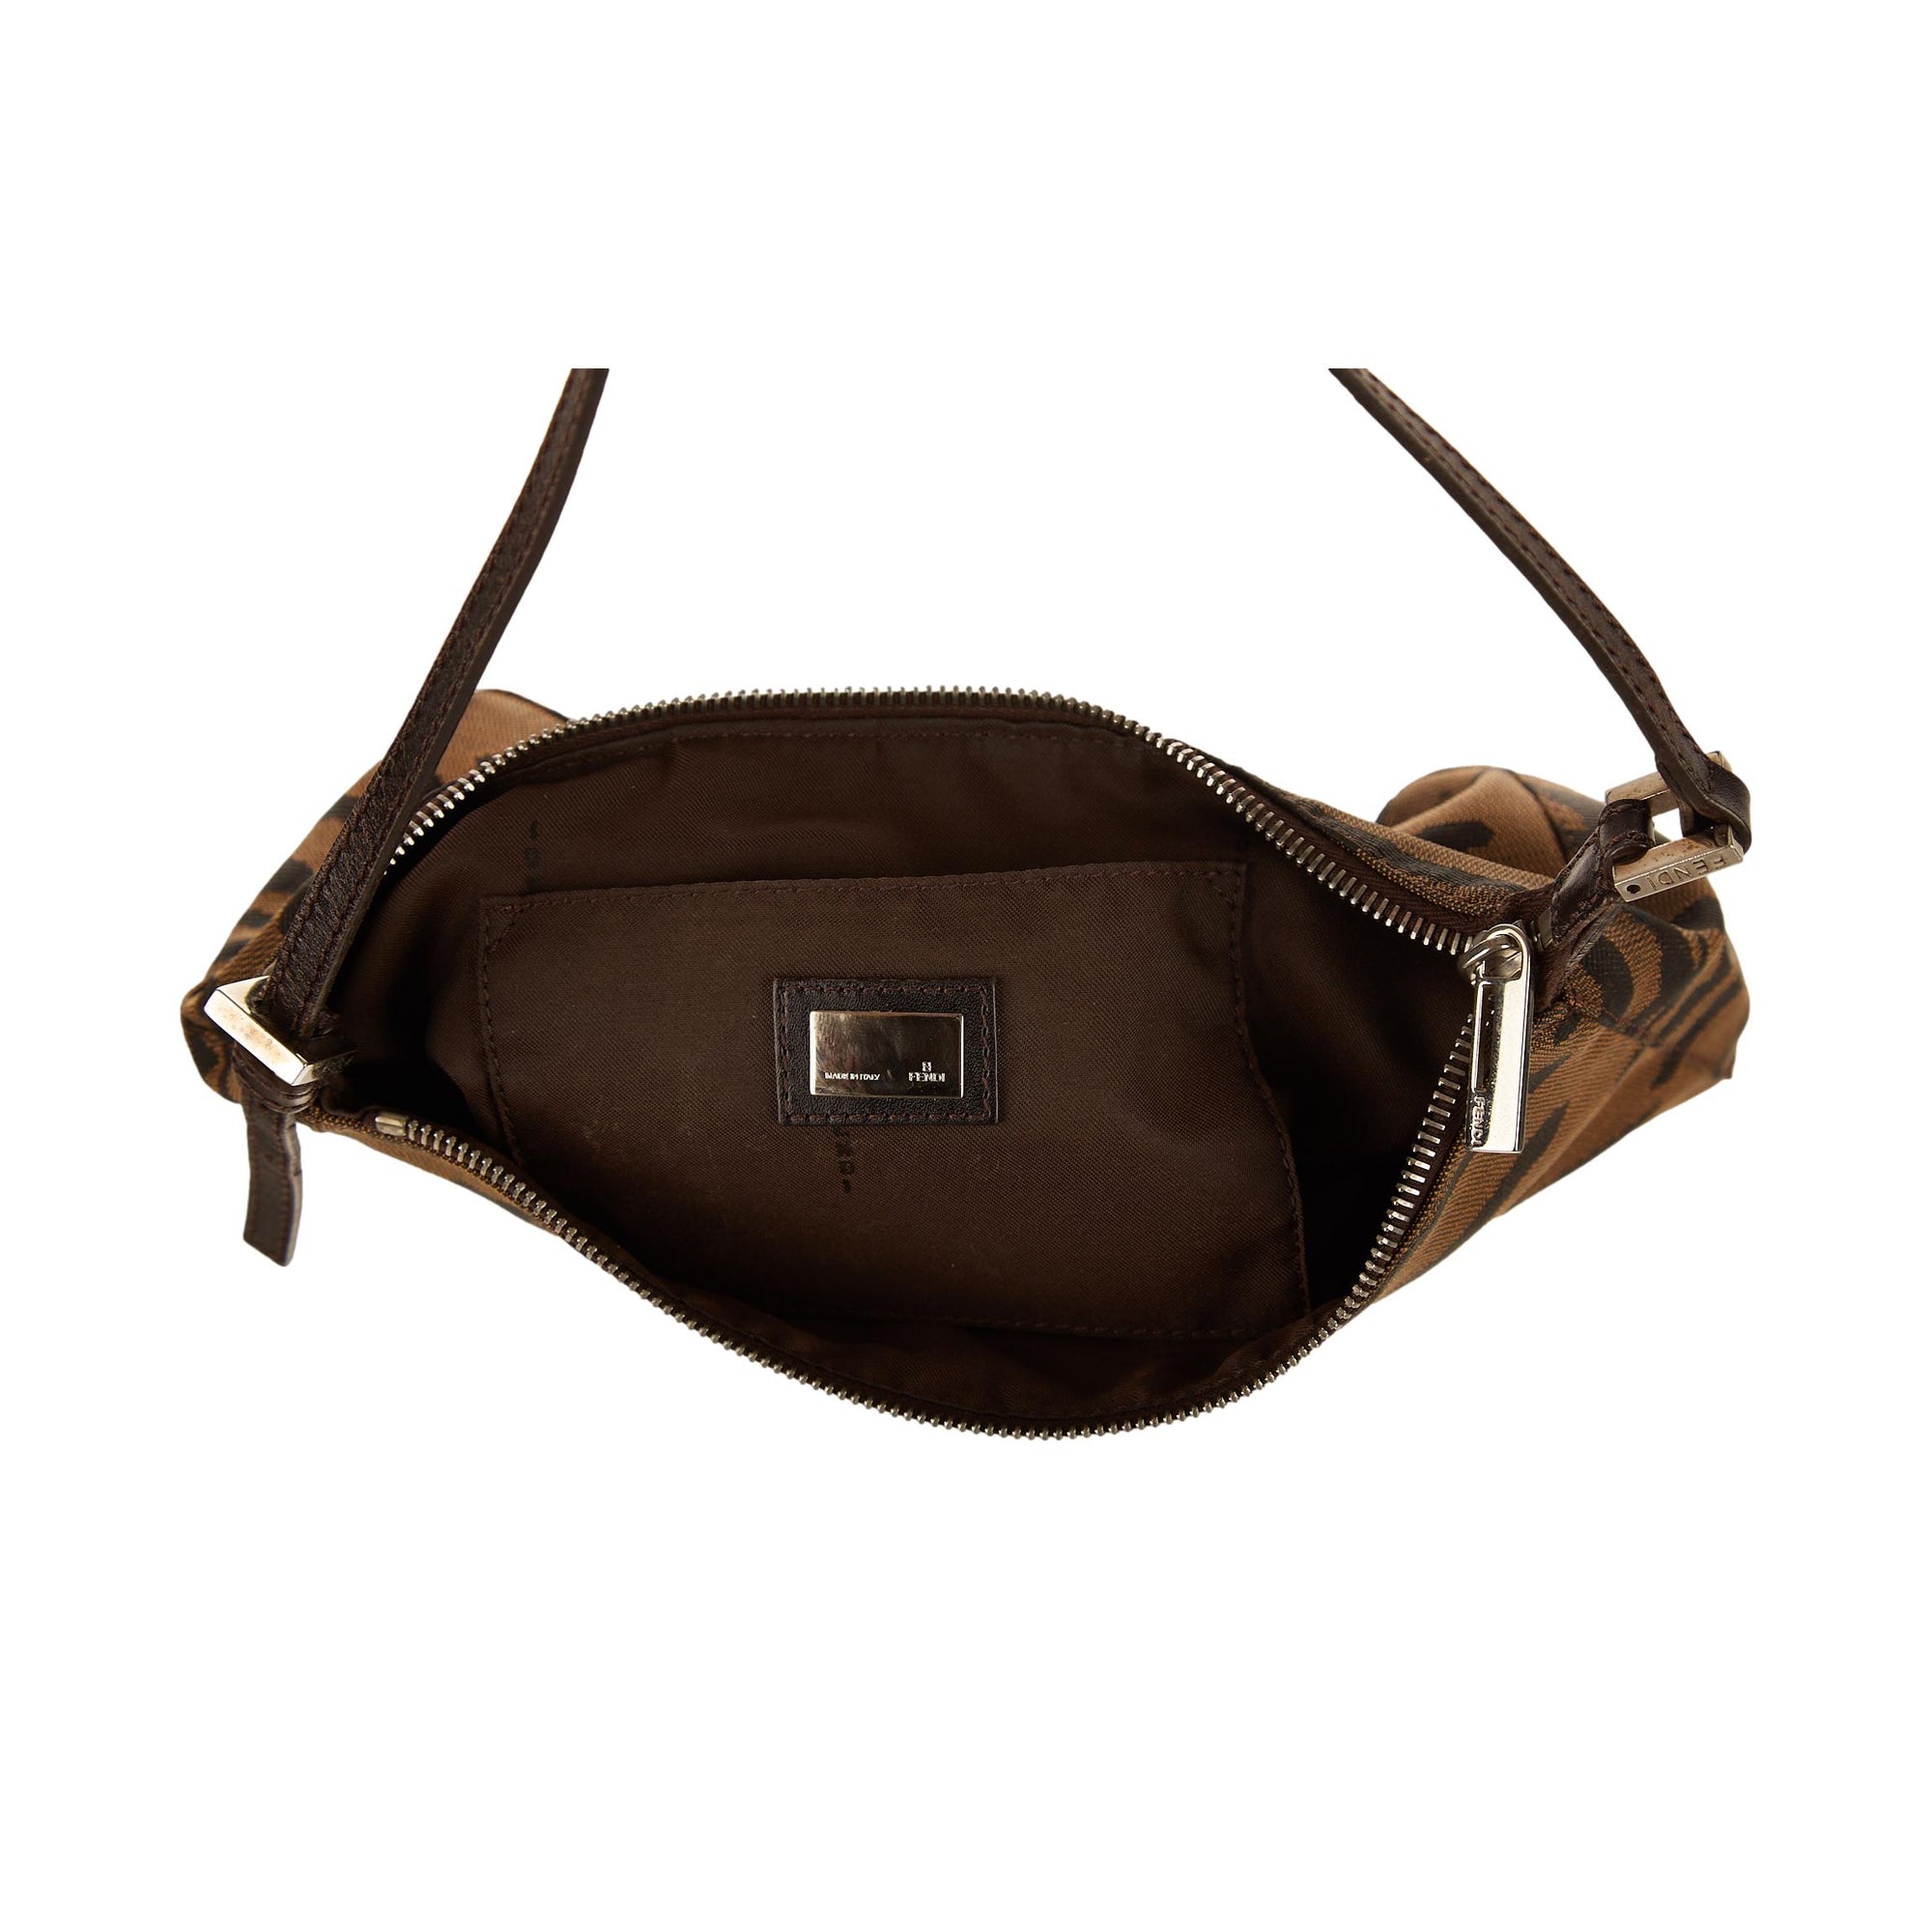 Fendi Brown Animal Print Shoulder Bag